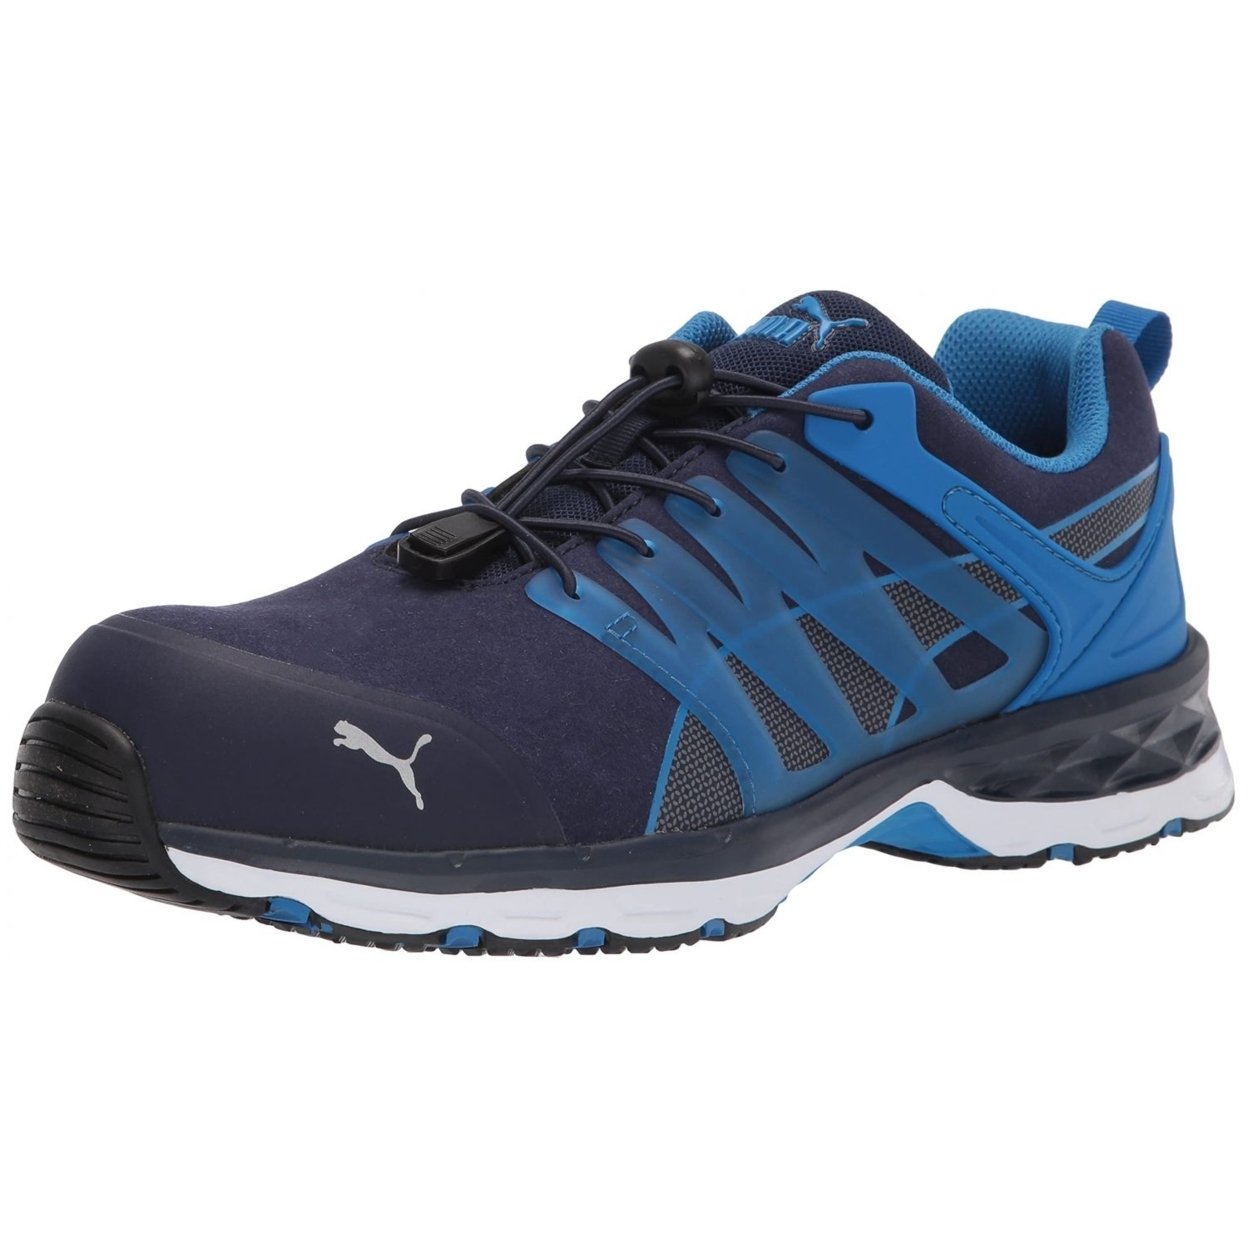 PUMA Safety Men's Velocity 2.0 Composite Toe ESD Work Shoe Blue - 643855 ONE SIZE BLUE - BLUE, 11